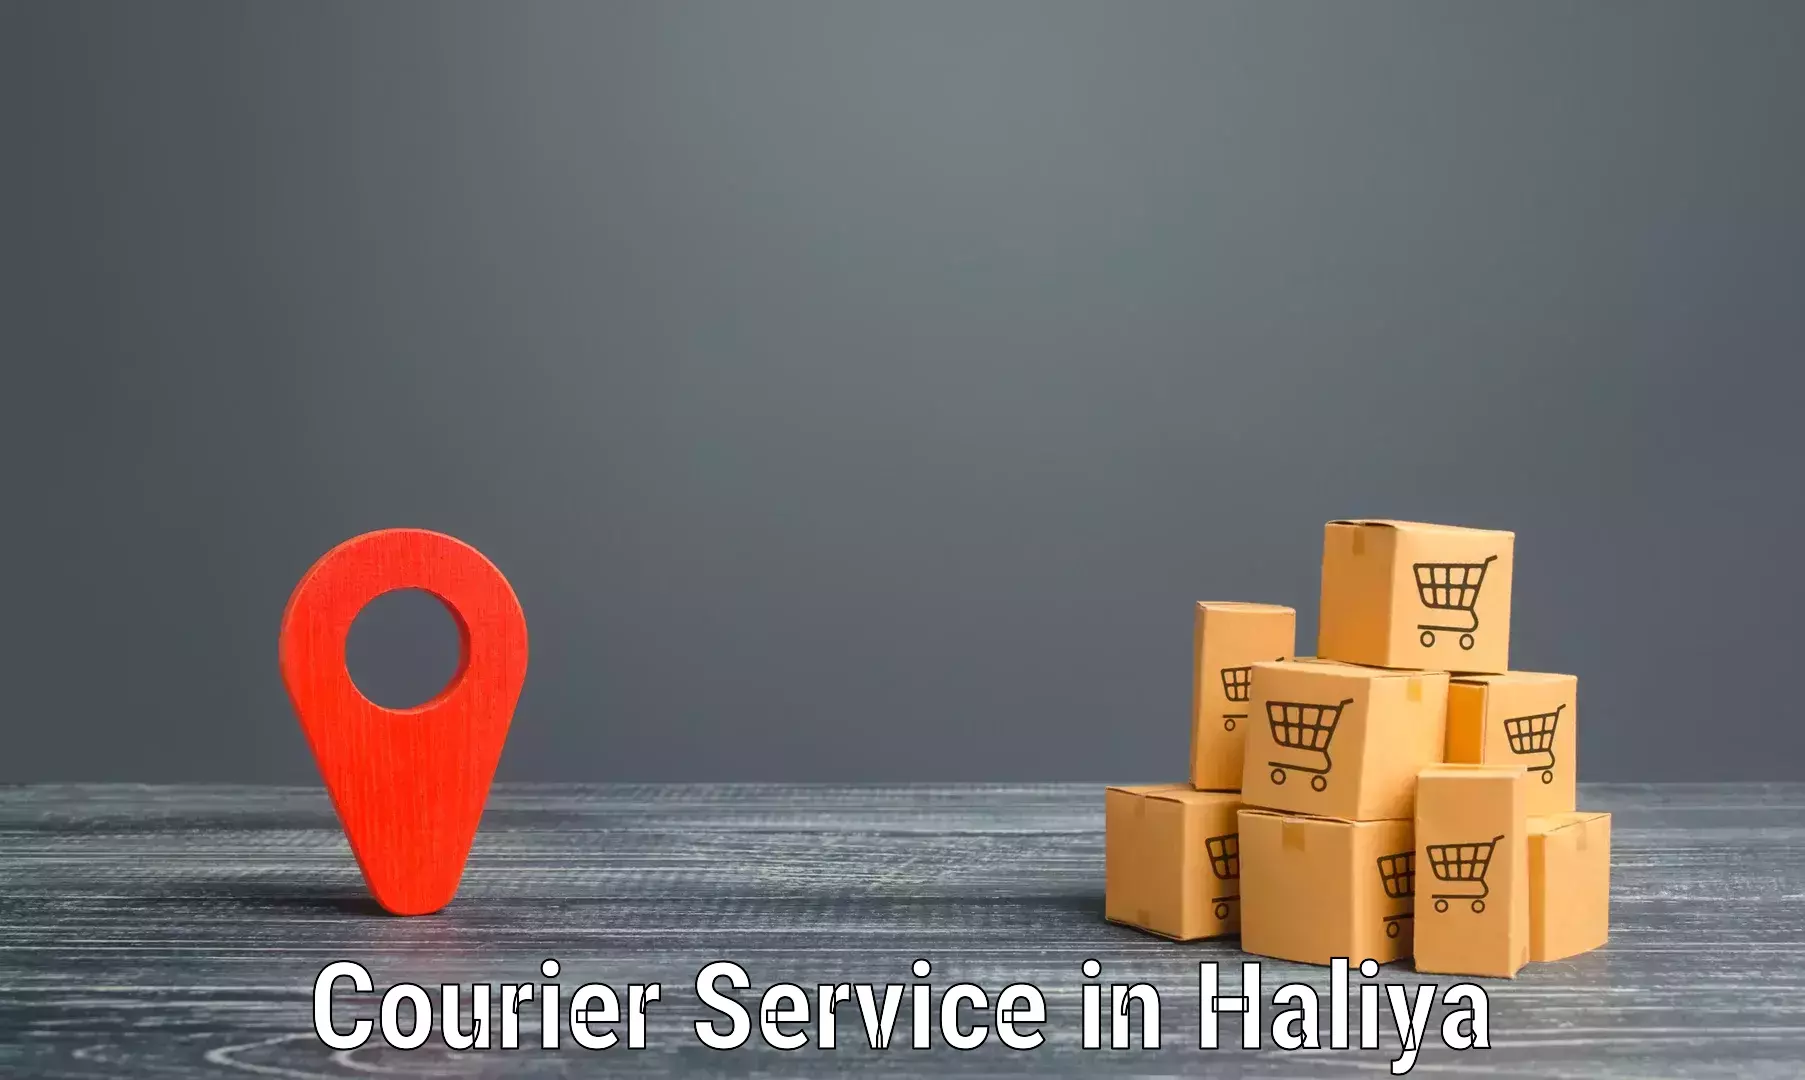 Courier service innovation in Haliya